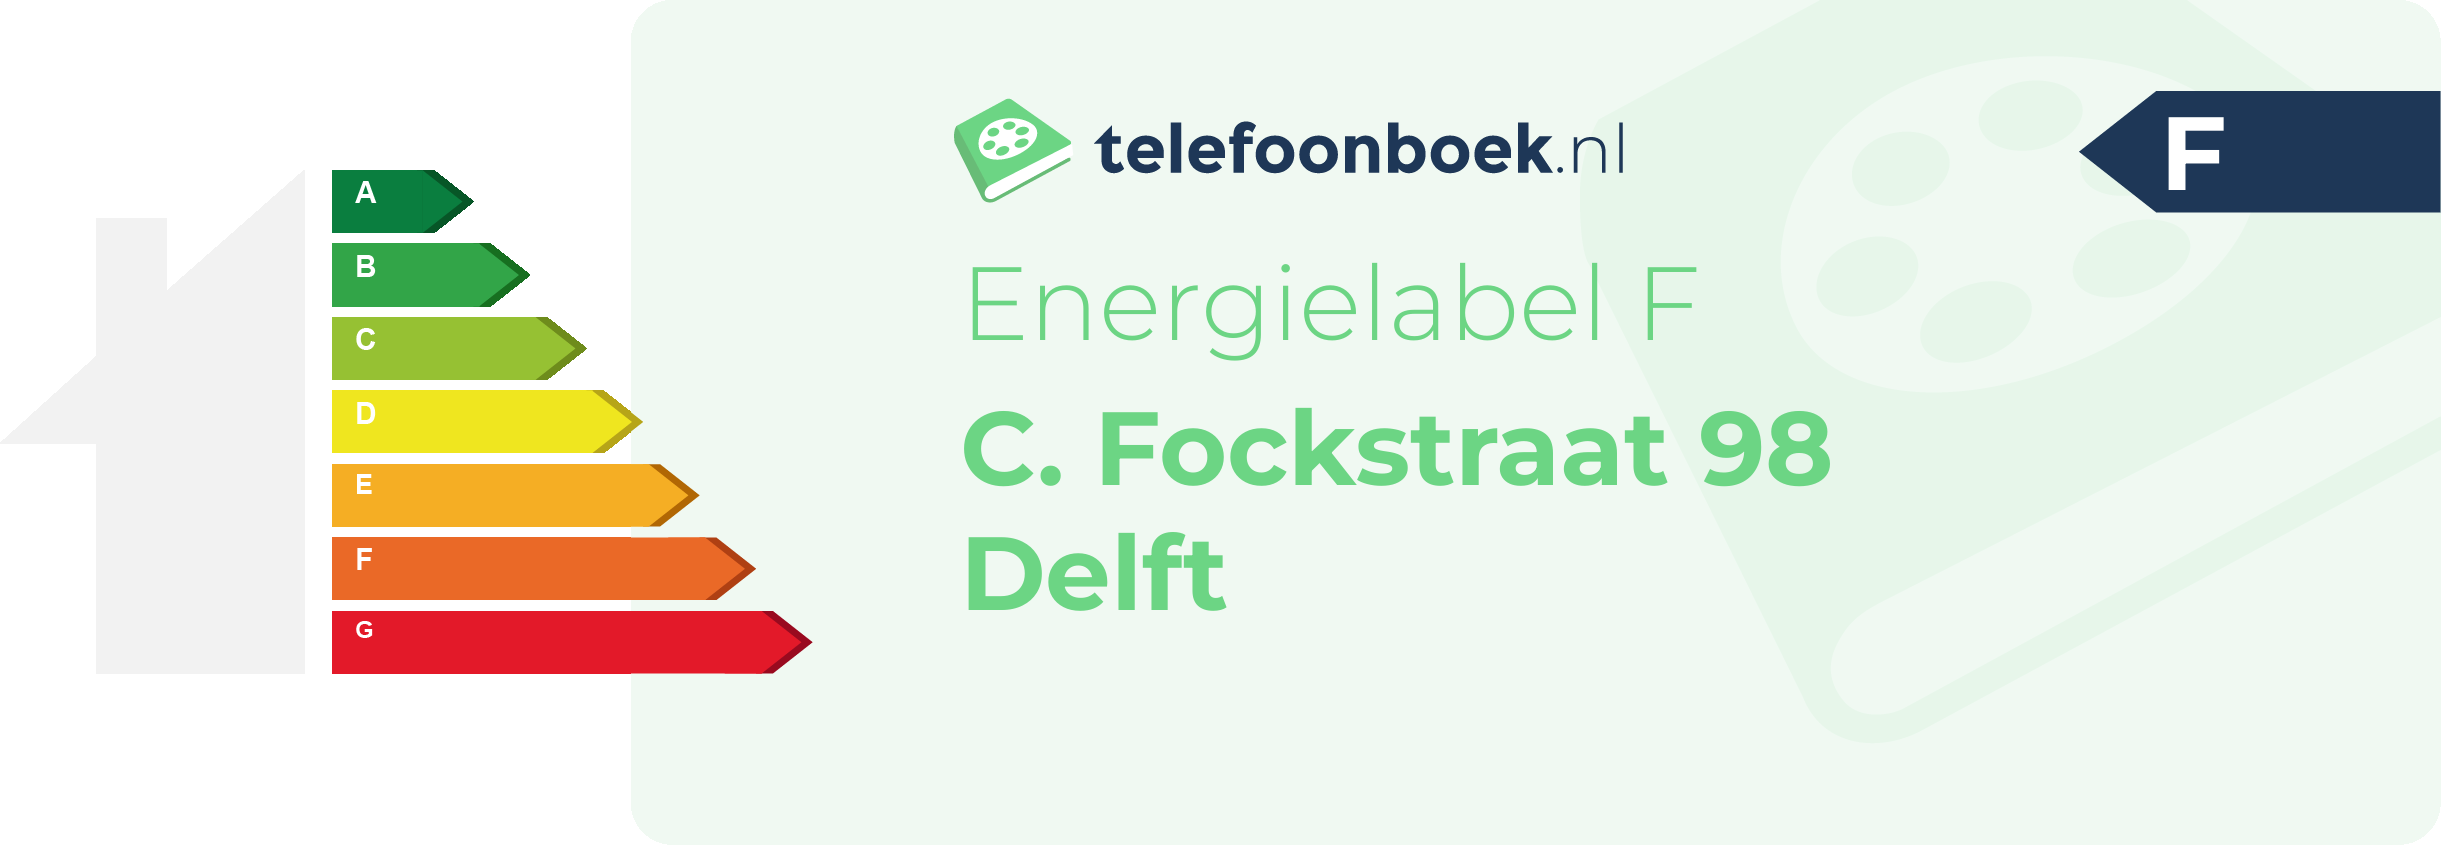 Energielabel C. Fockstraat 98 Delft